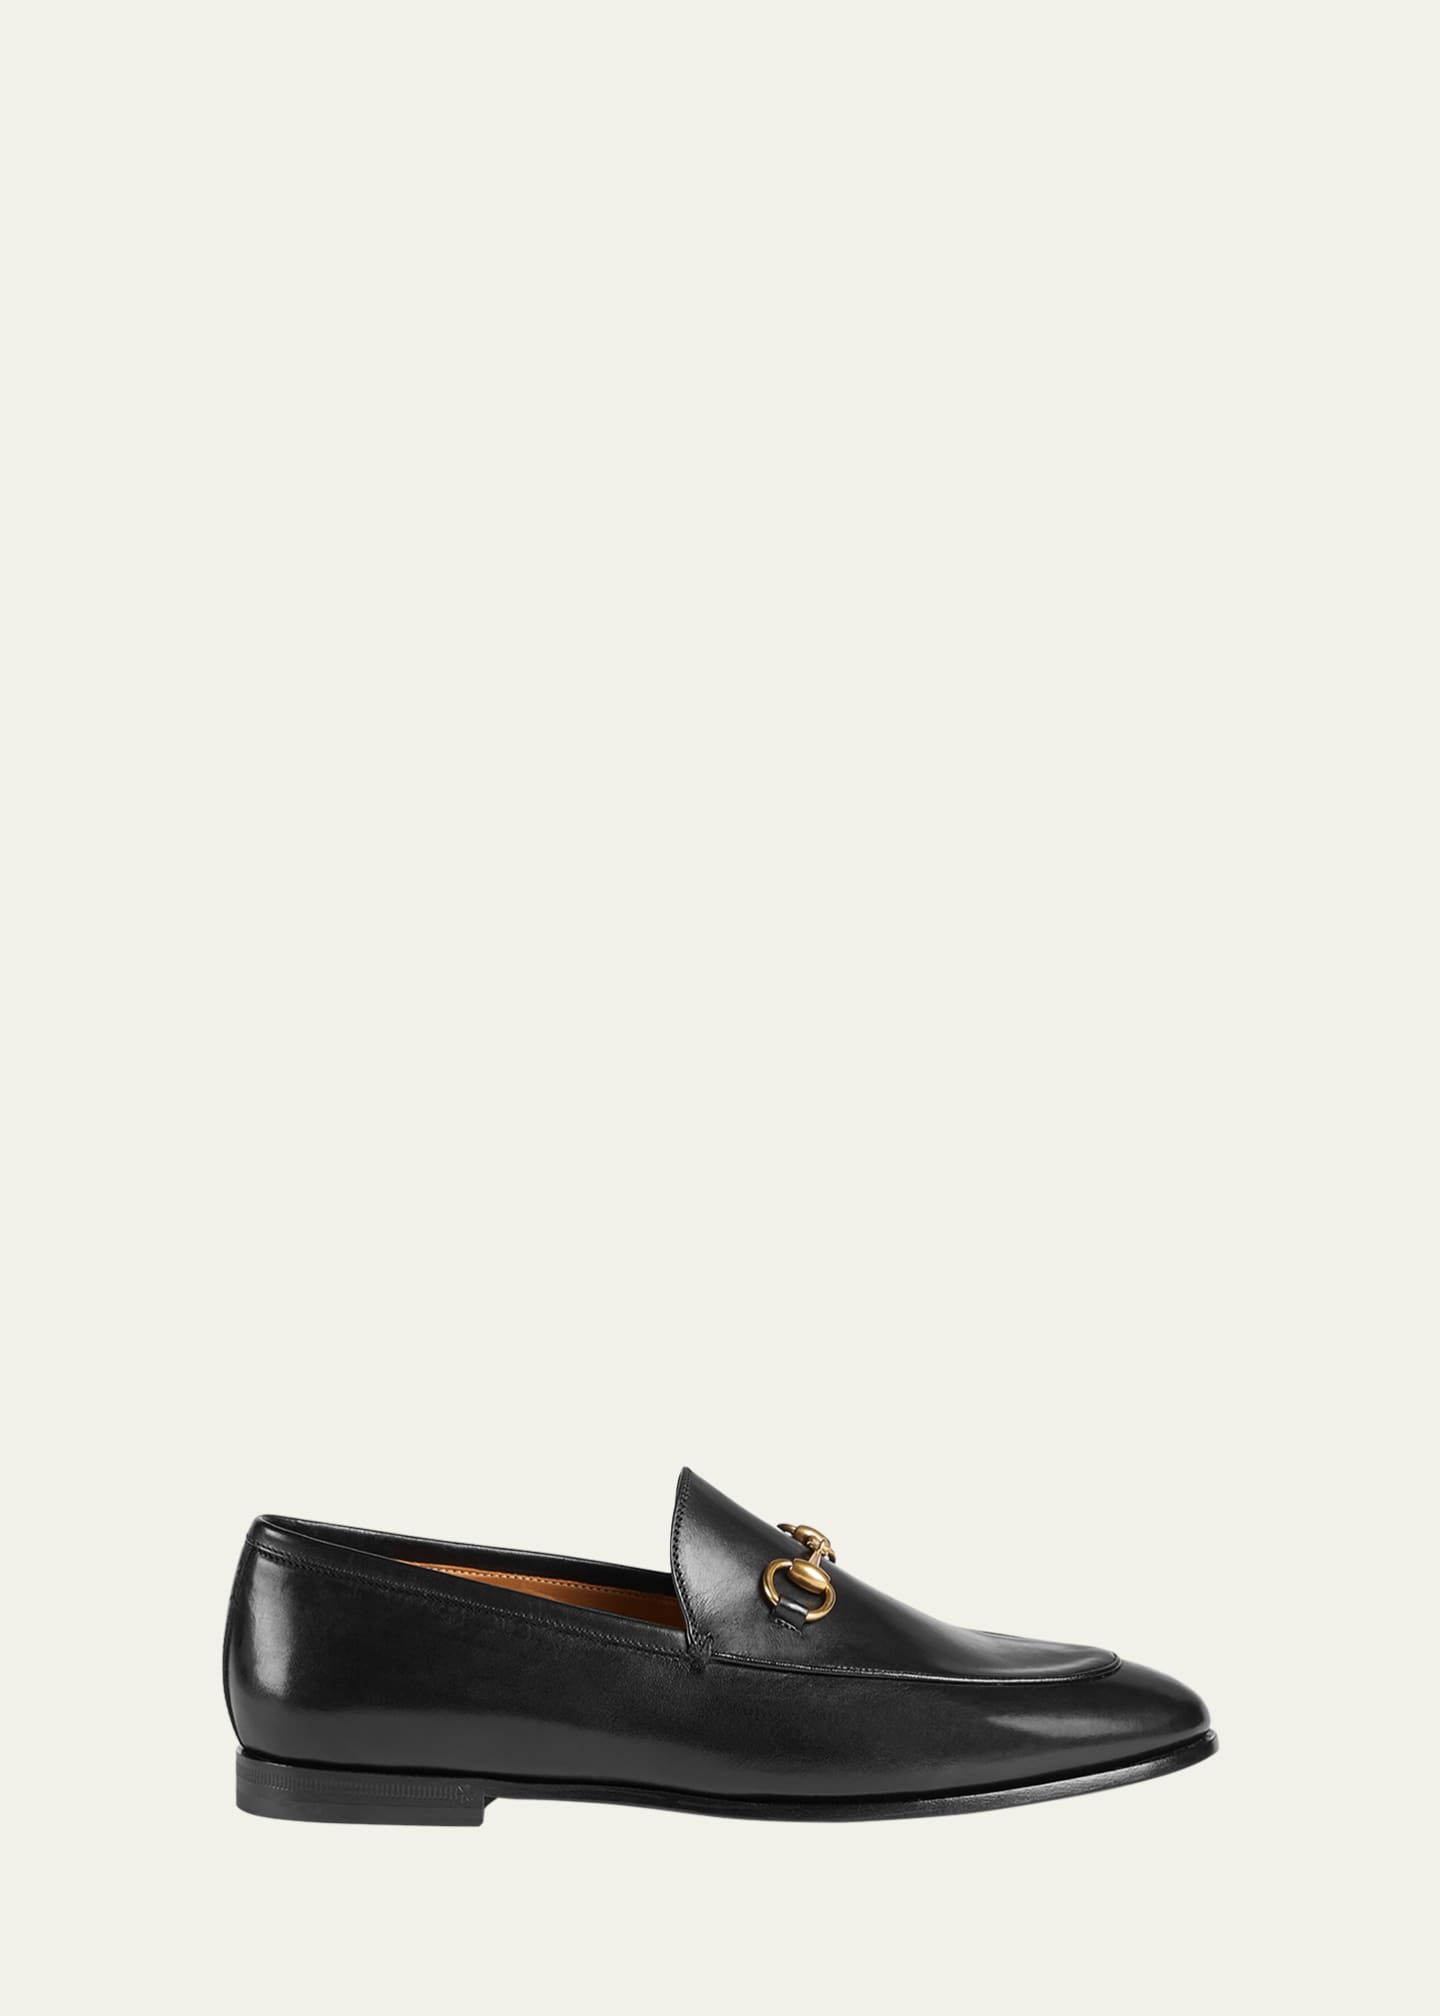 Gucci Jordaan Leather Bit Loafers - Bergdorf Goodman